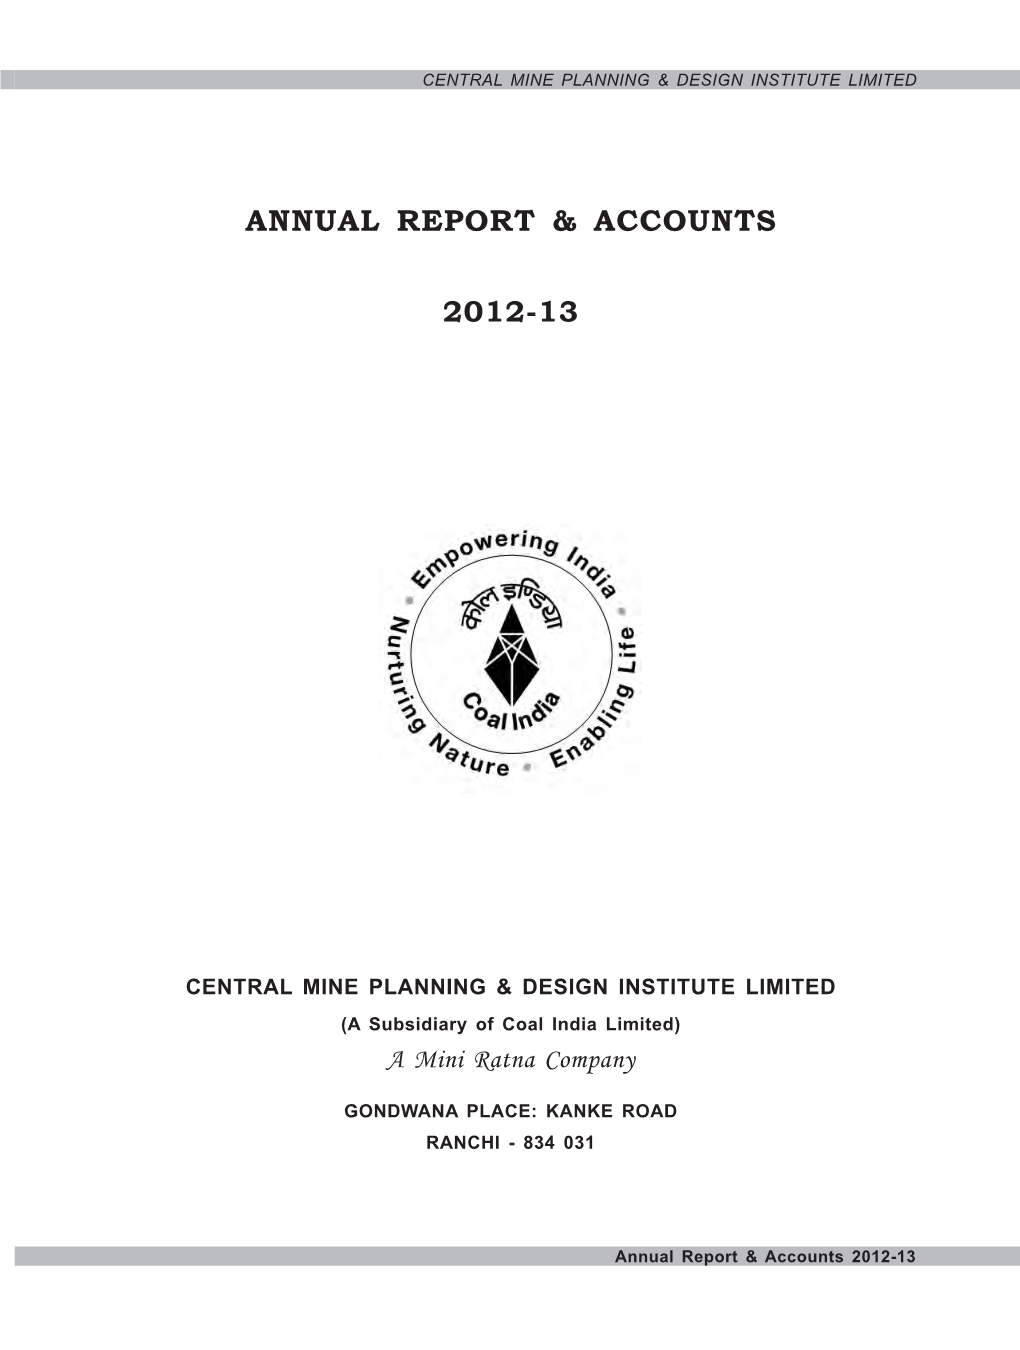 Annual Report & Accounts 2012-13